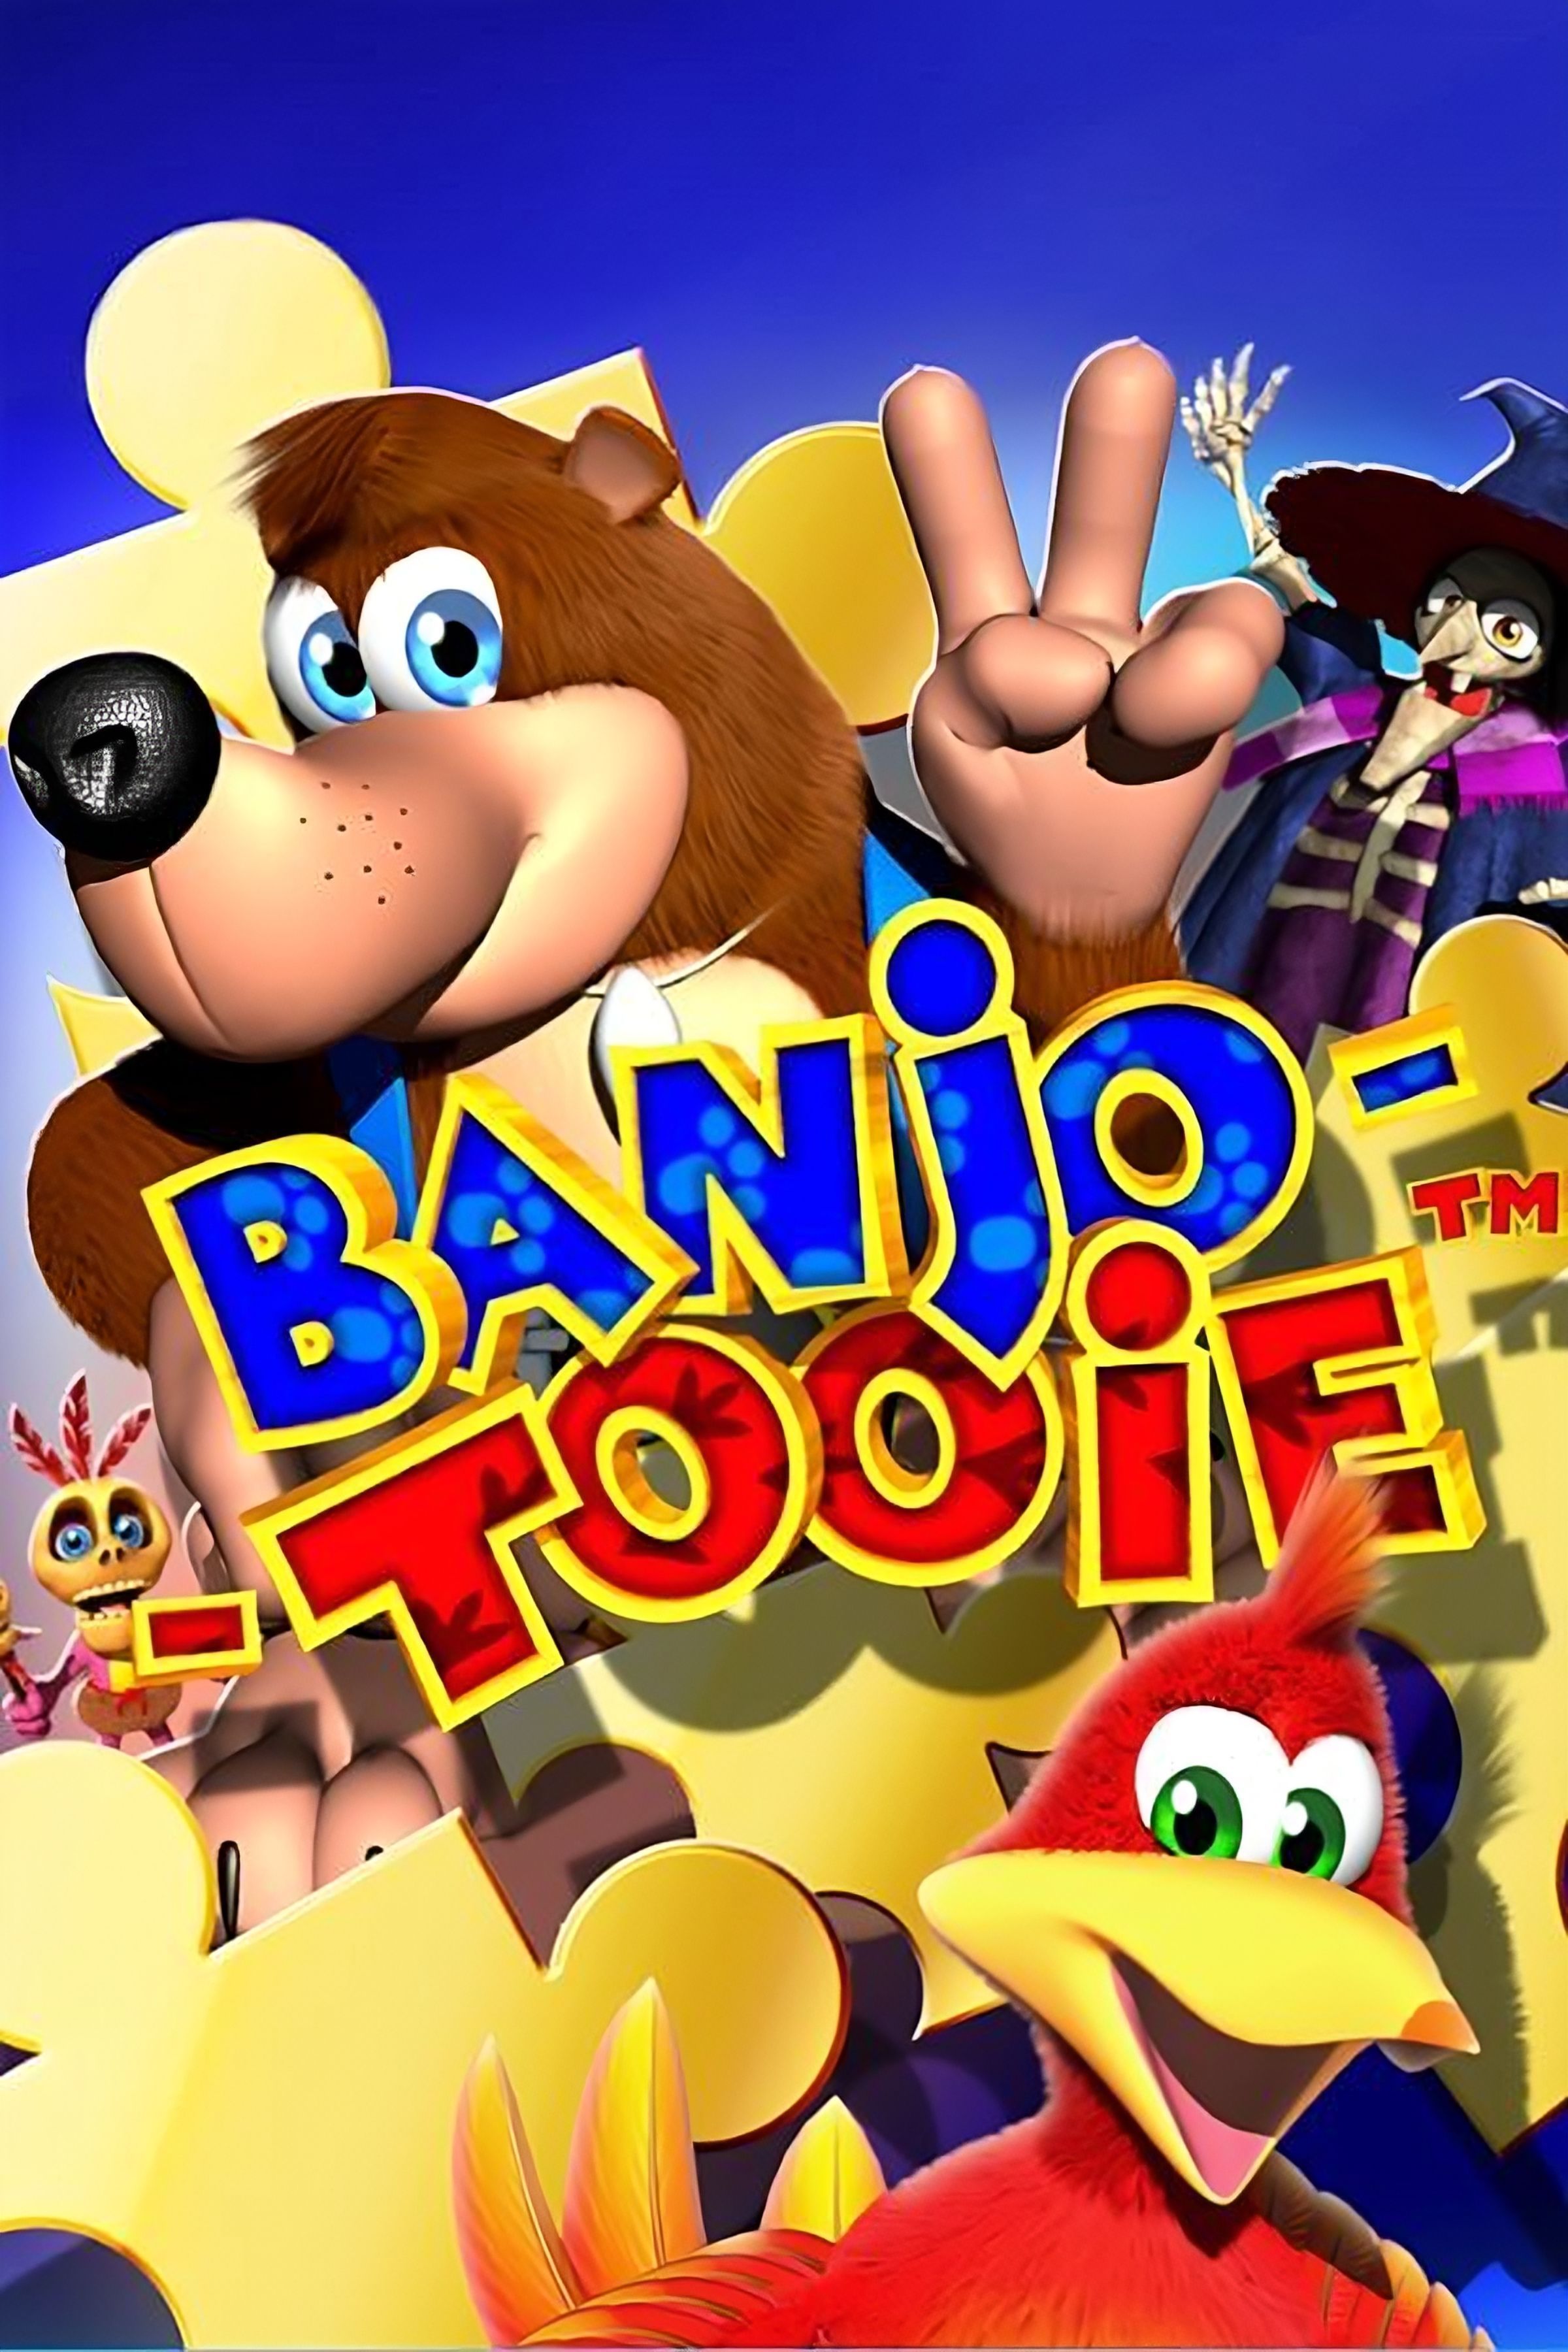 Xbox 360 Longplay [112] Banjo-Kazooie (part 1 of 4) 